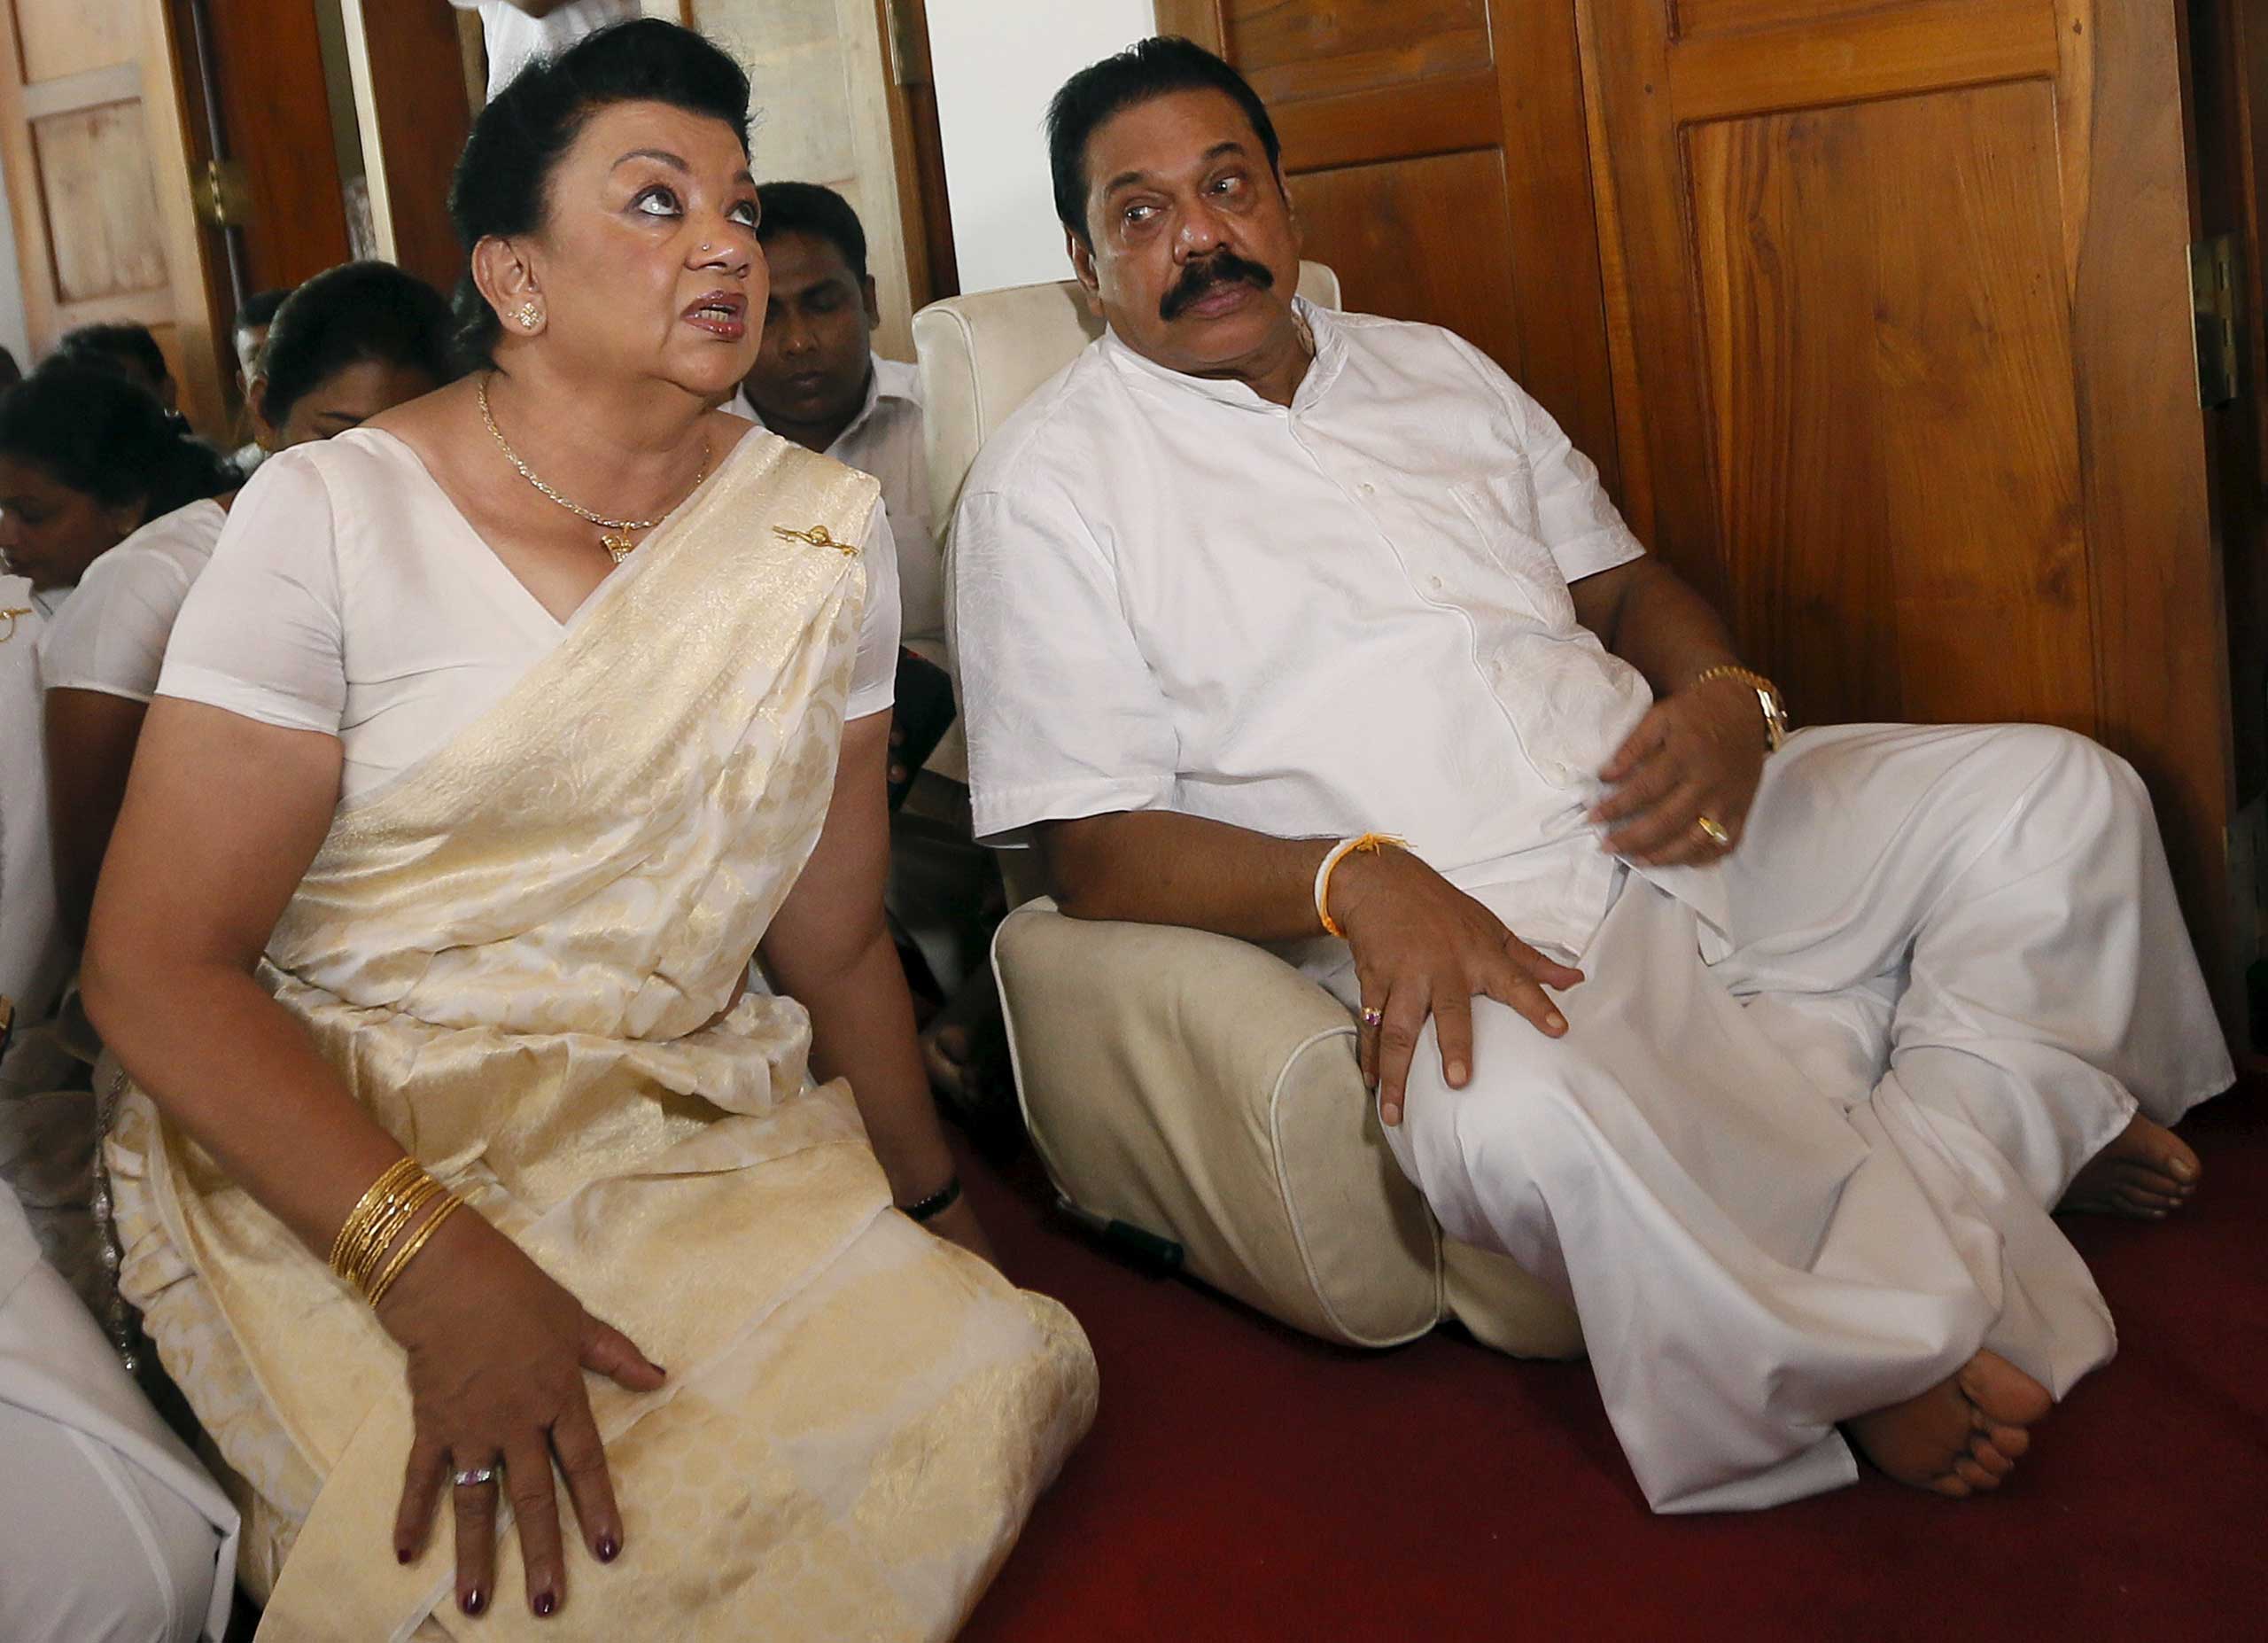 Former Sri Lankan president Mahinda Rajapaksa sits next to his wife Shiranthi Rajapaksa during a religious ceremony at his residence in Medamulana, Sri Lanka, on July 1, 2015. (Dinuka Liyanawatte—Reuters)